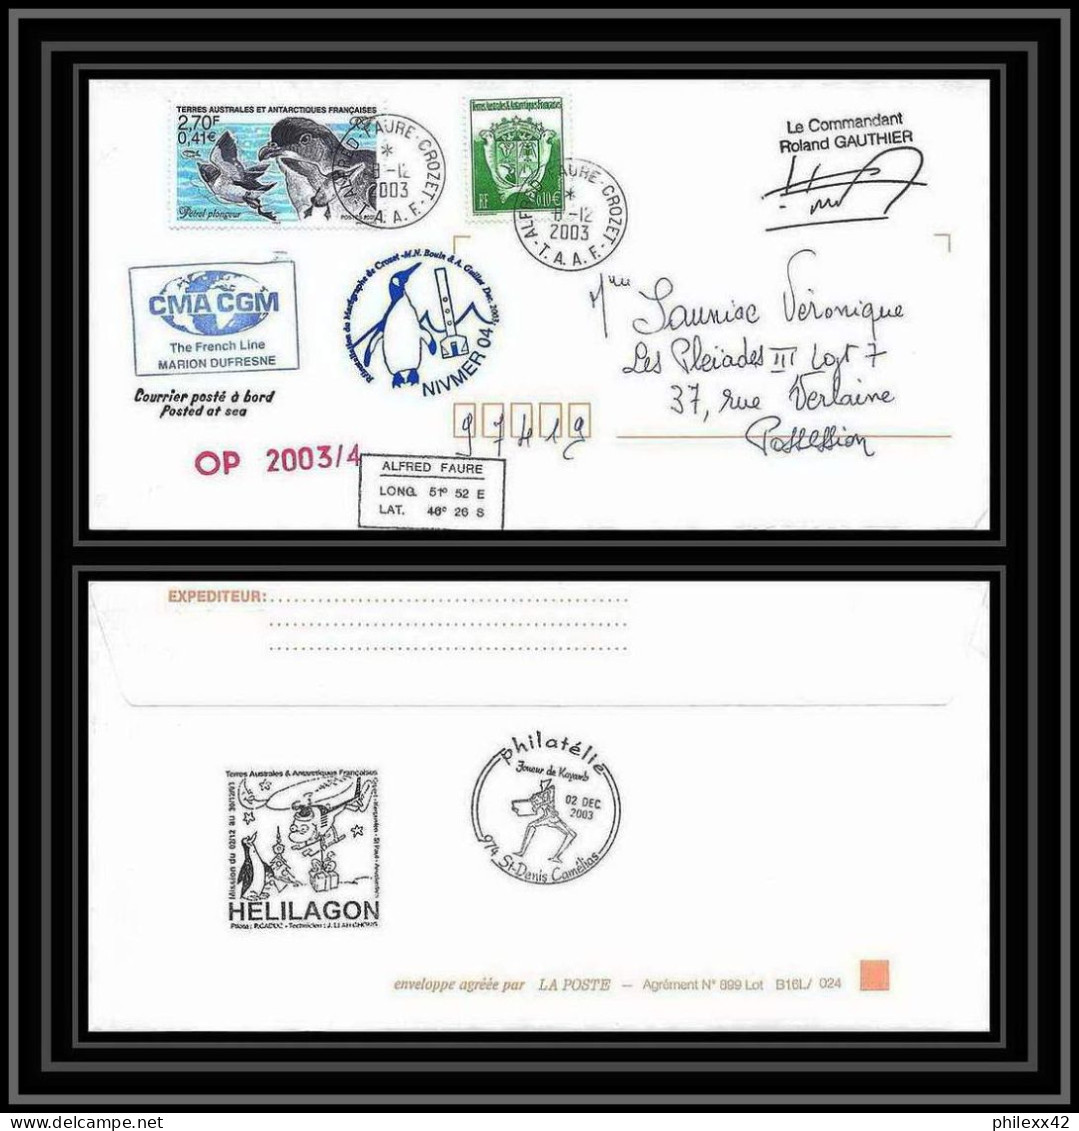 2421 Dufresne 2 Signé Signed Op 2003/4 8/12/2003 N°288 Terres Australes (taaf) Lettre Cover Petrel Oiseaux (birds) - Covers & Documents